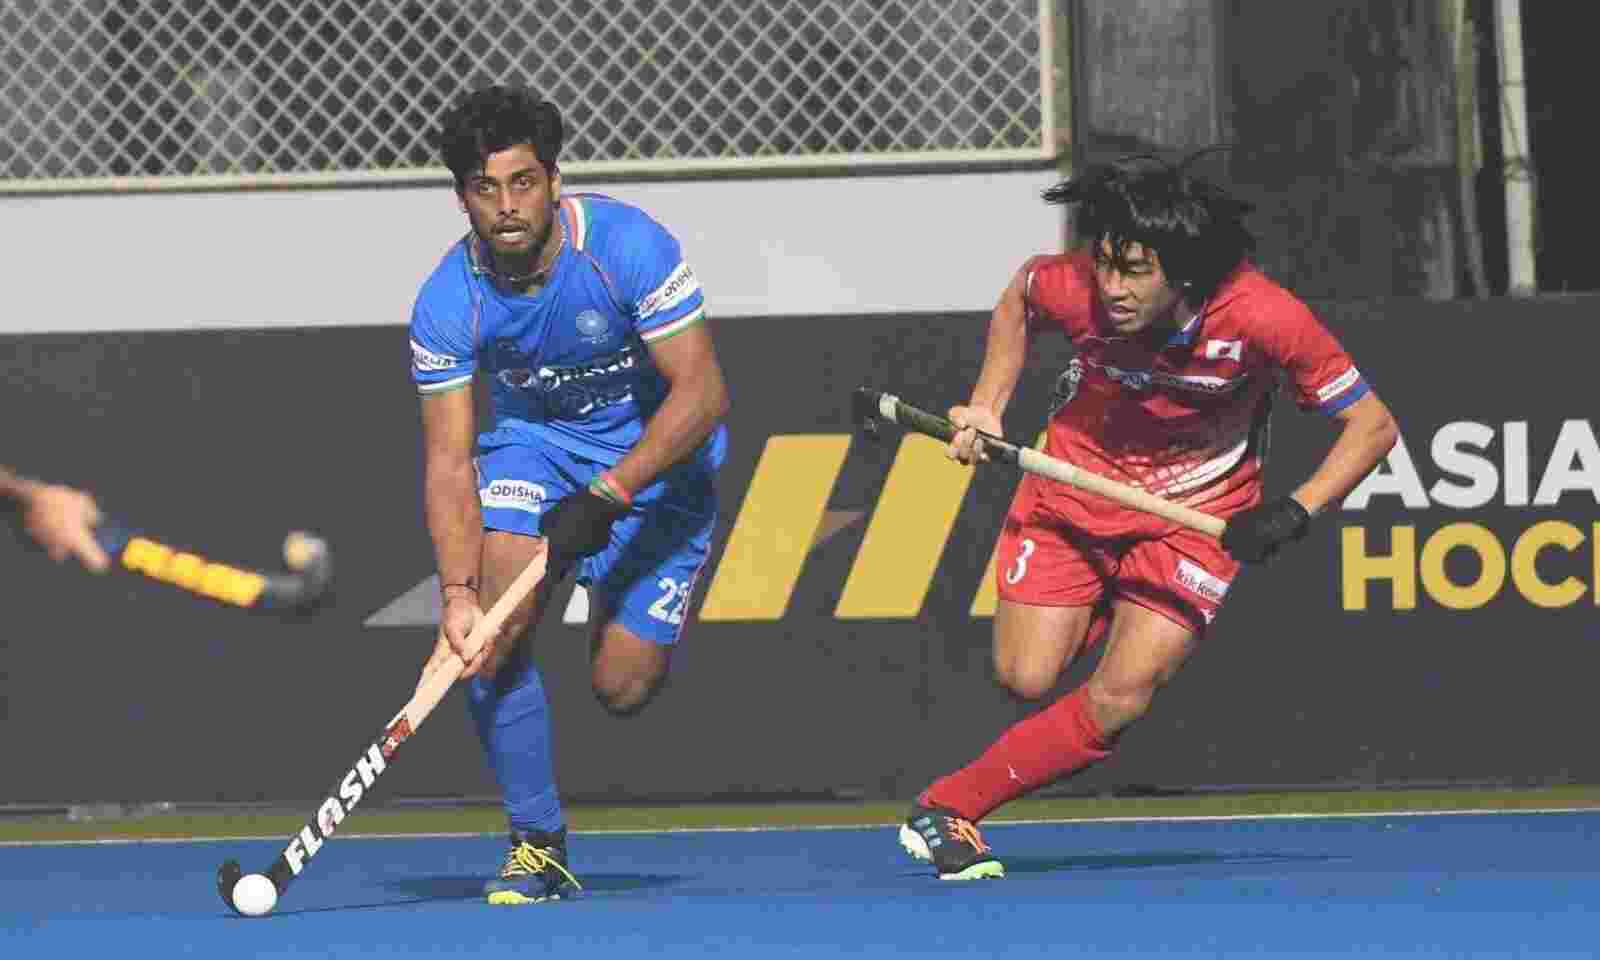 indiaplaysjapanforbronzemedalinasiacupmenshockey